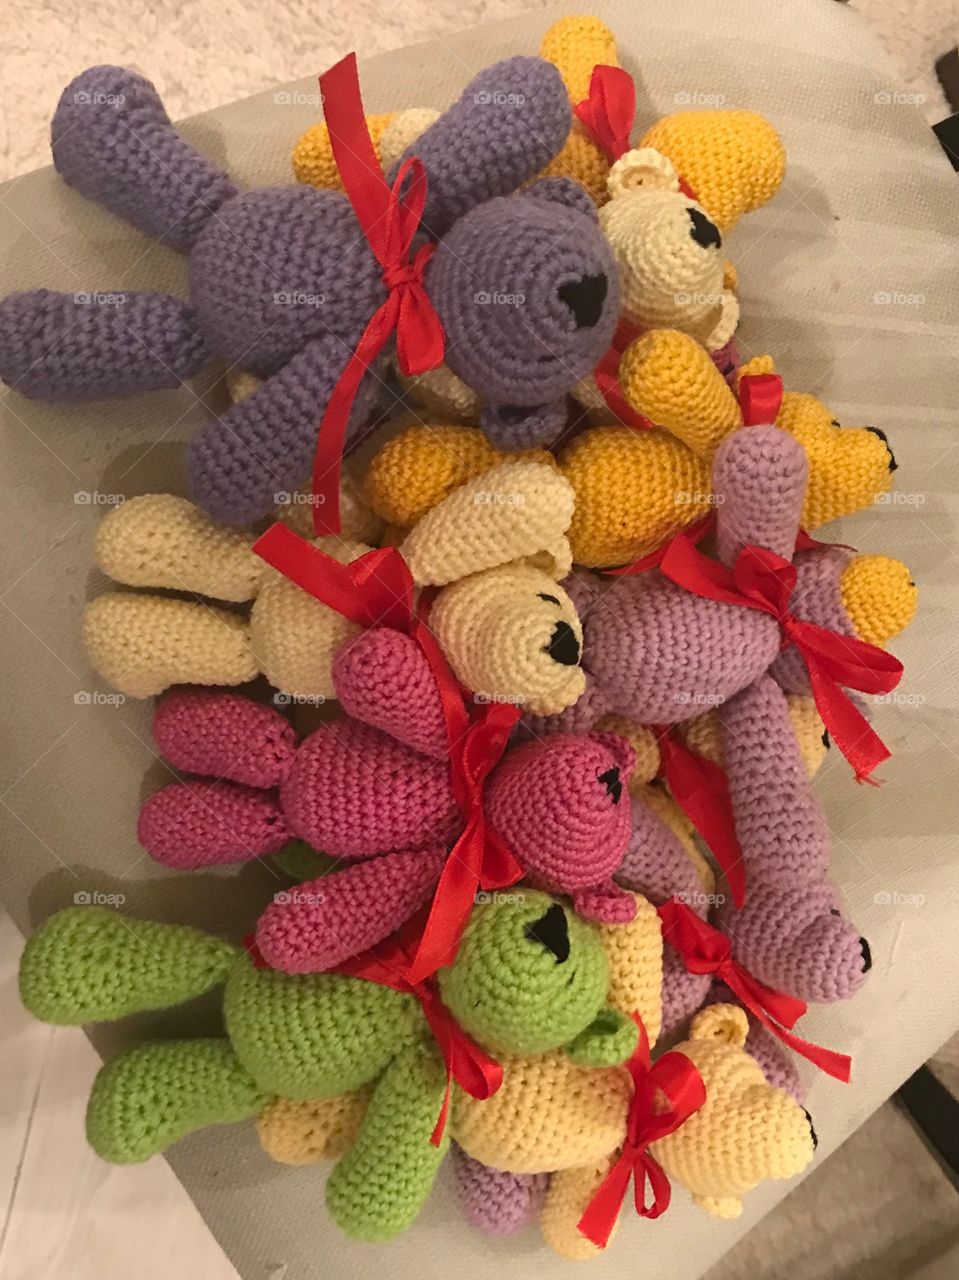 Handmade crocheted multicolored teddy bears